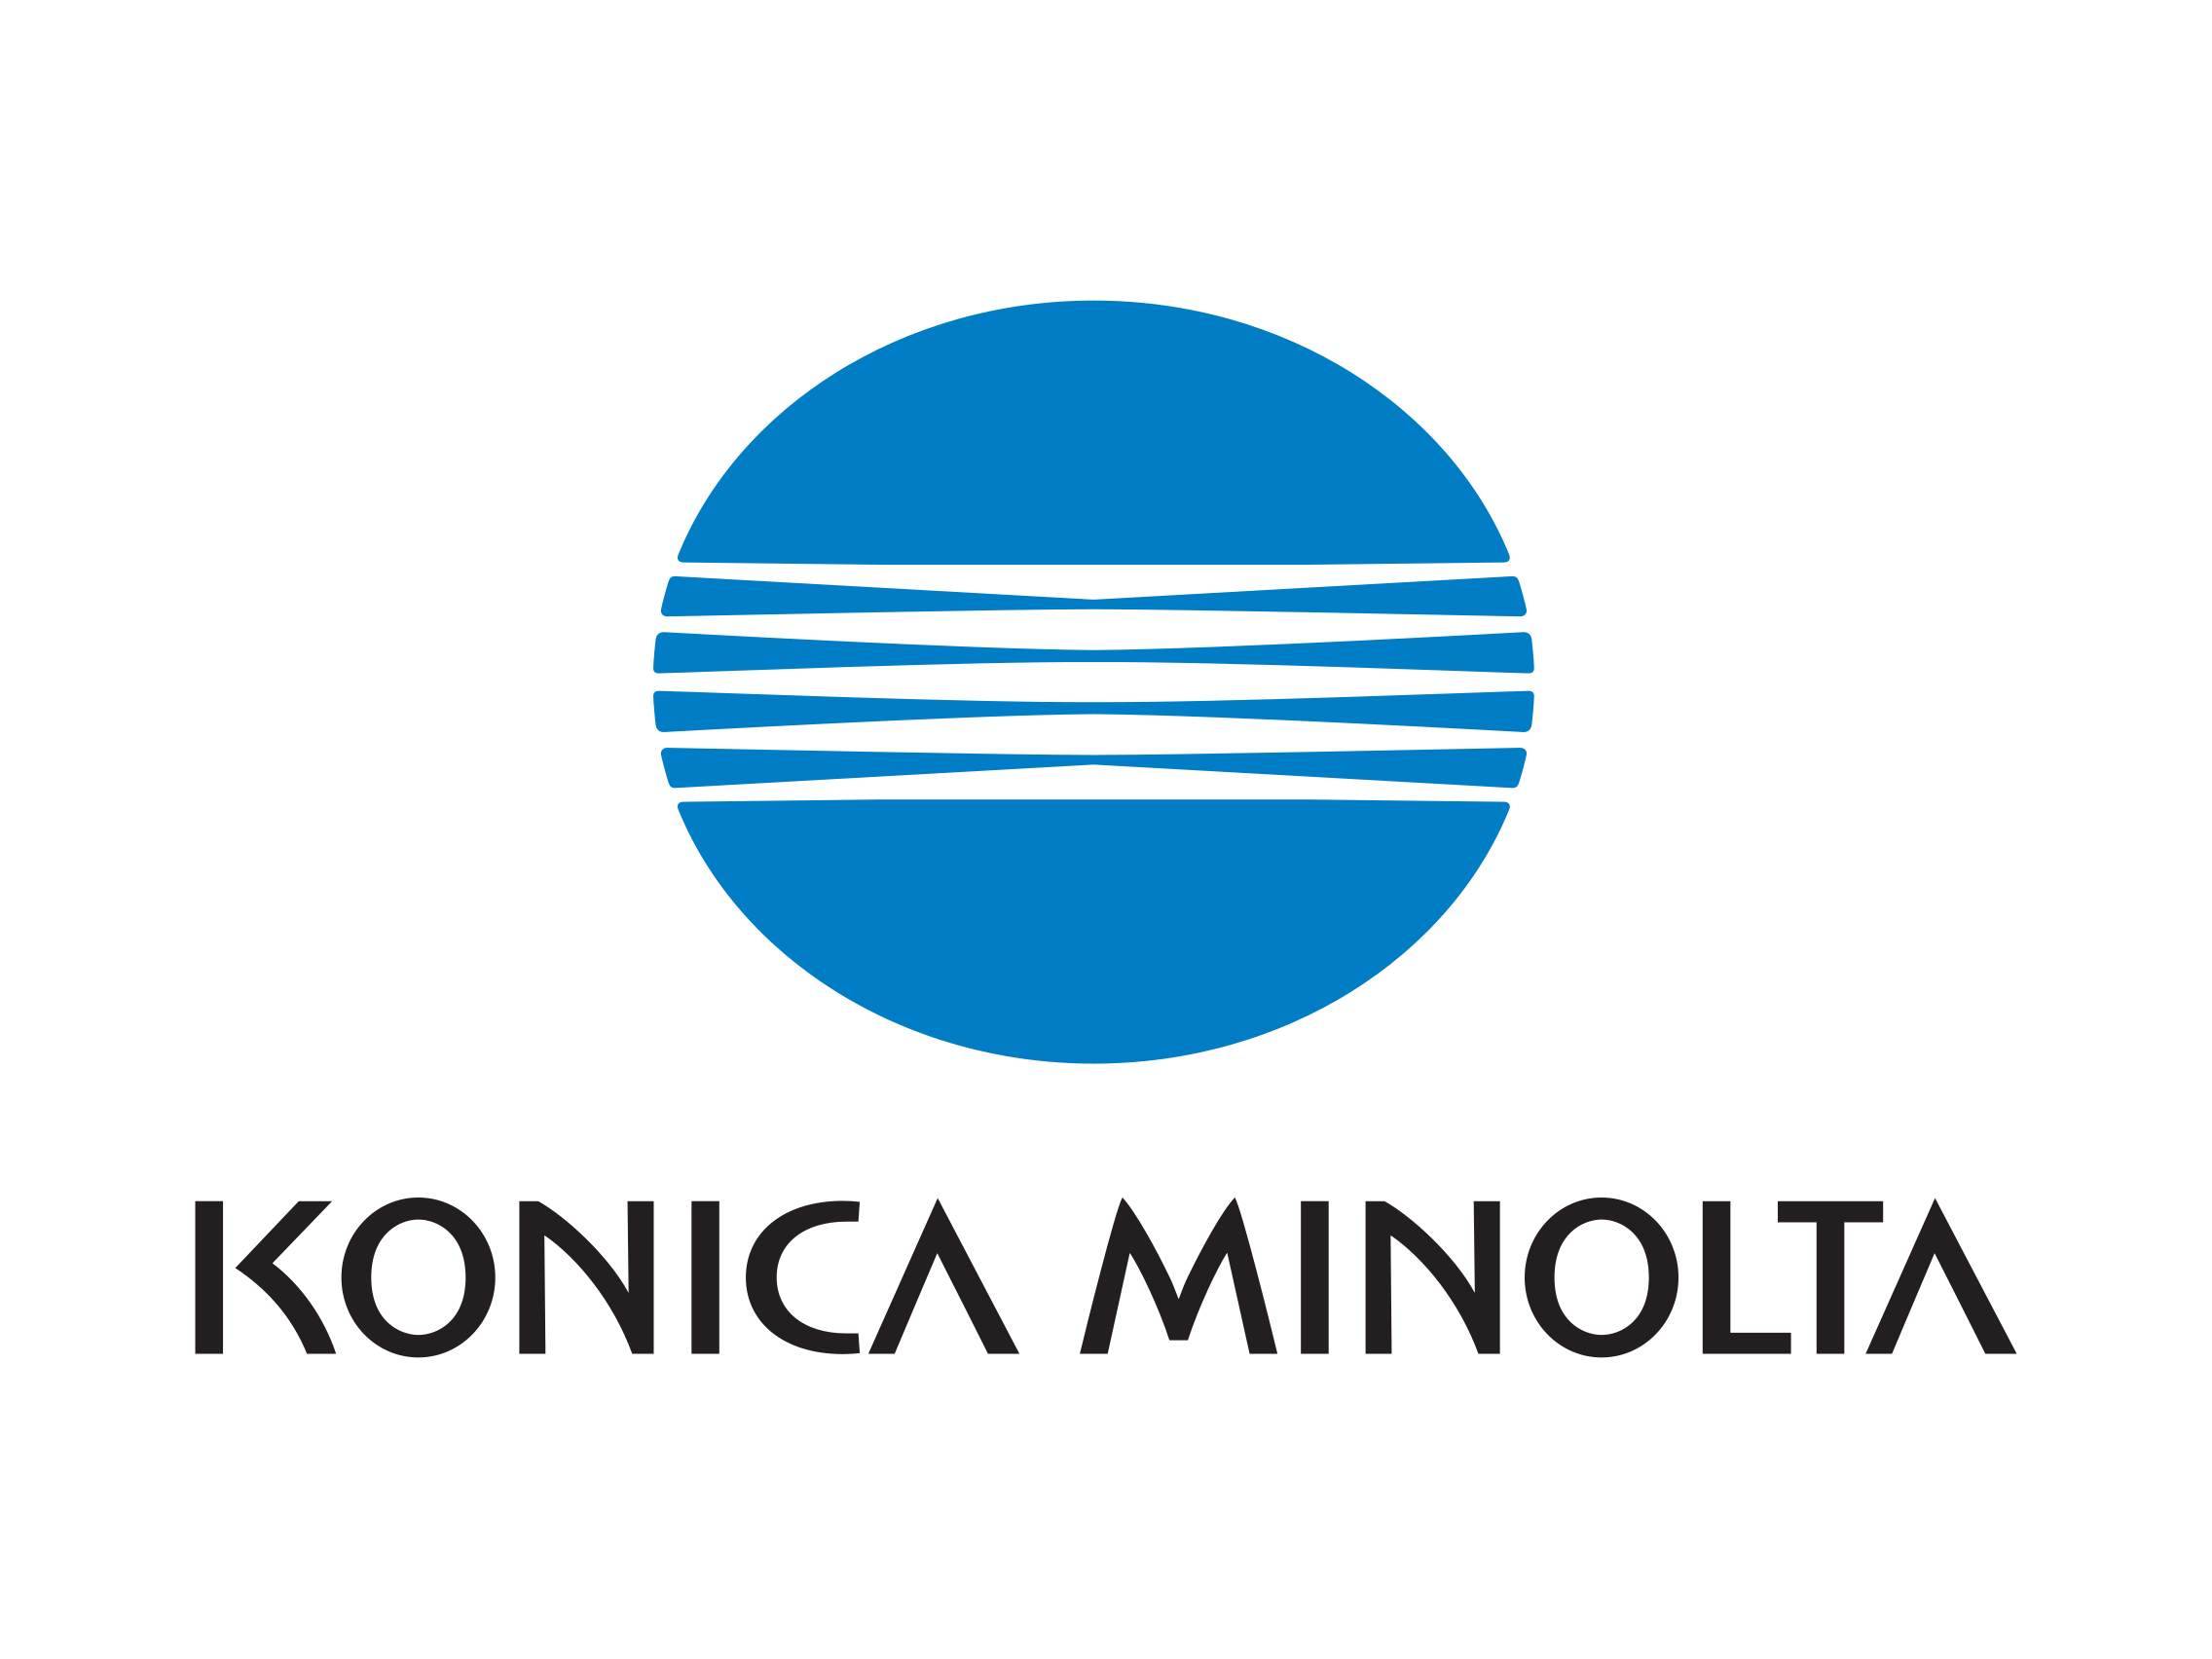 Konica-Minolta-logo-plain.png